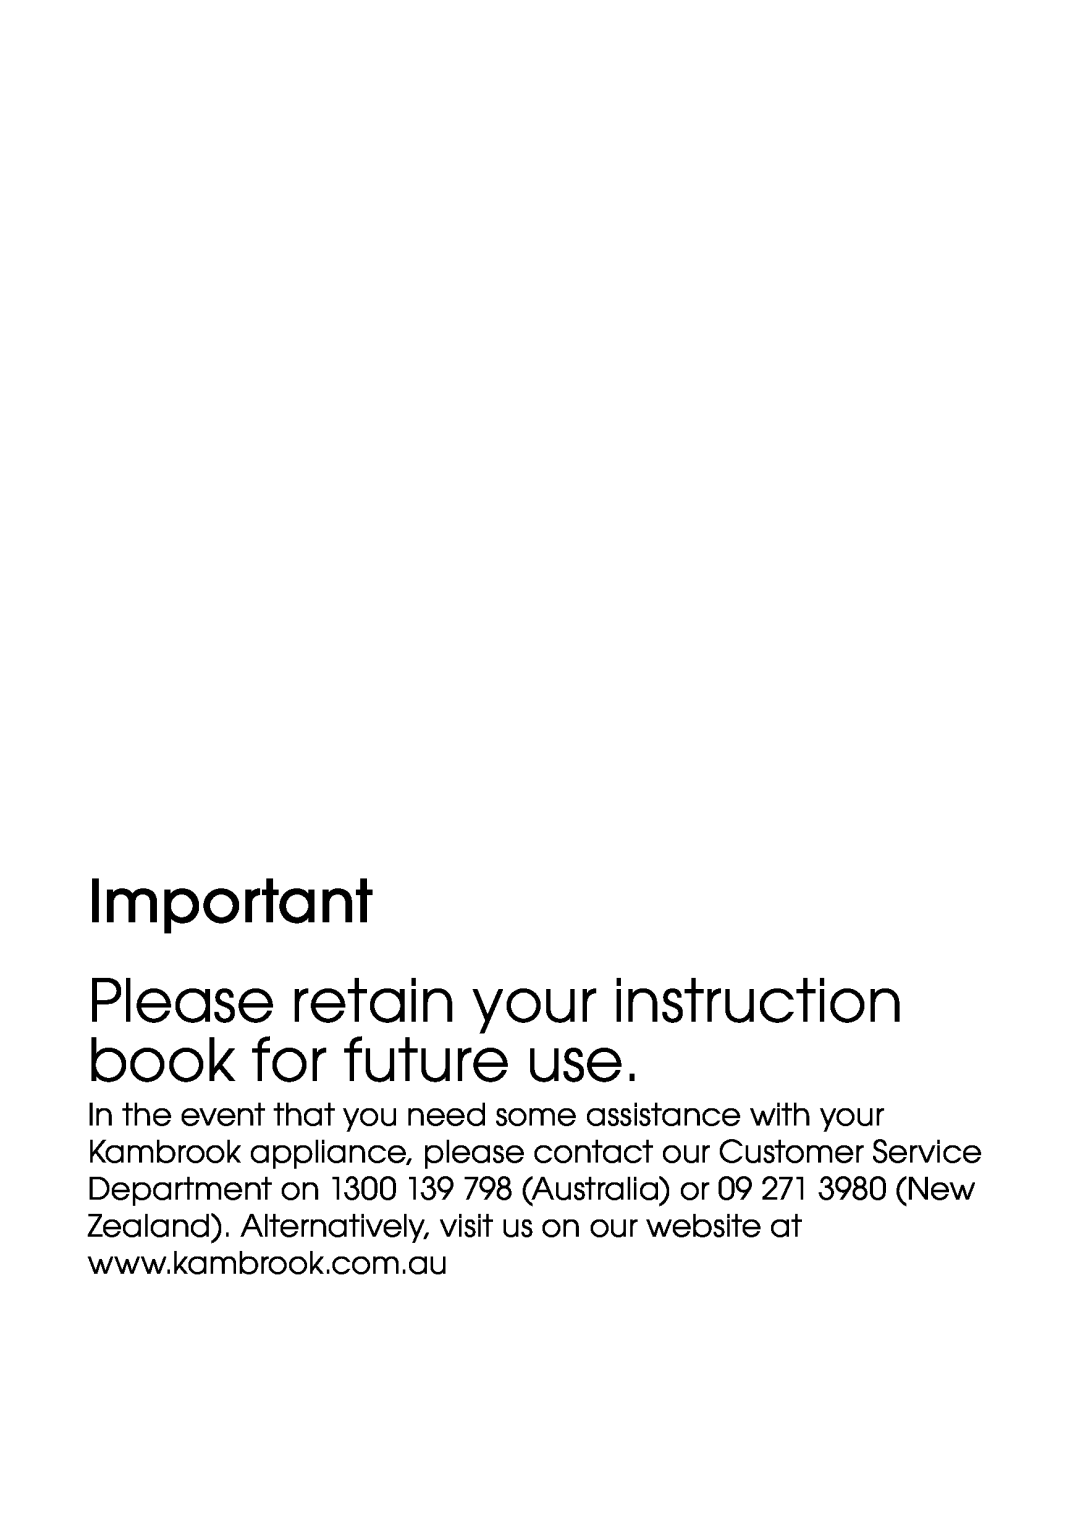 Kambrook KIS20 manual Please retain your instruction book for future use 